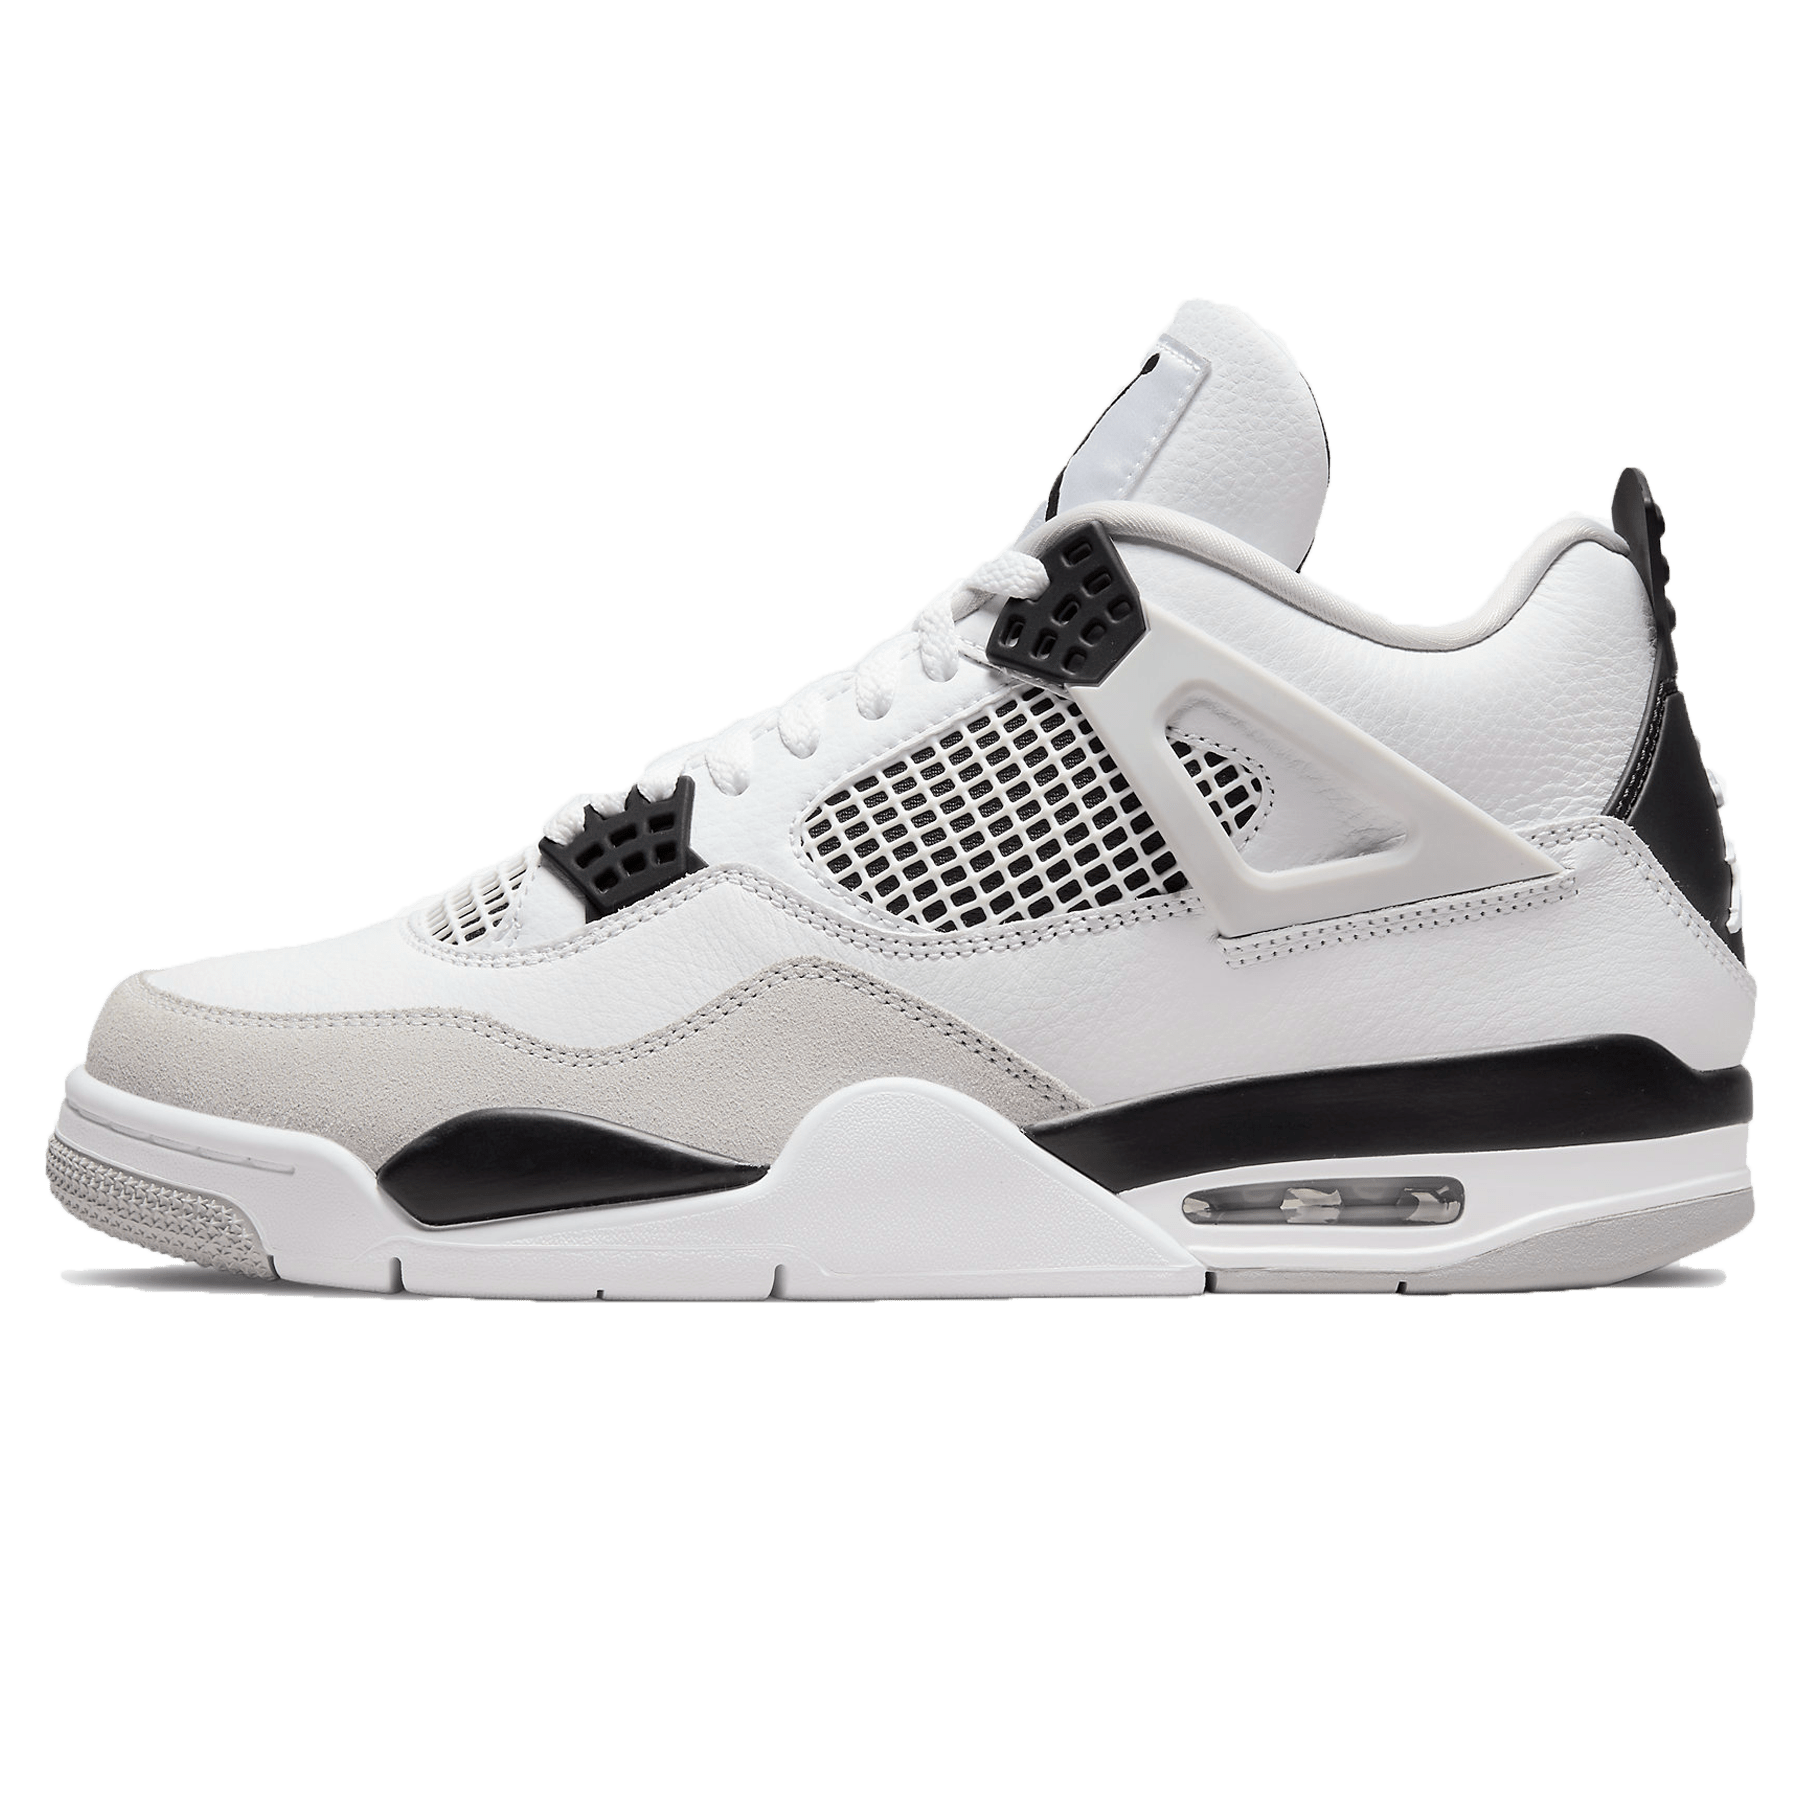 Jordan & Converse: Pre-Nike Team USA Shoes Up for Auction